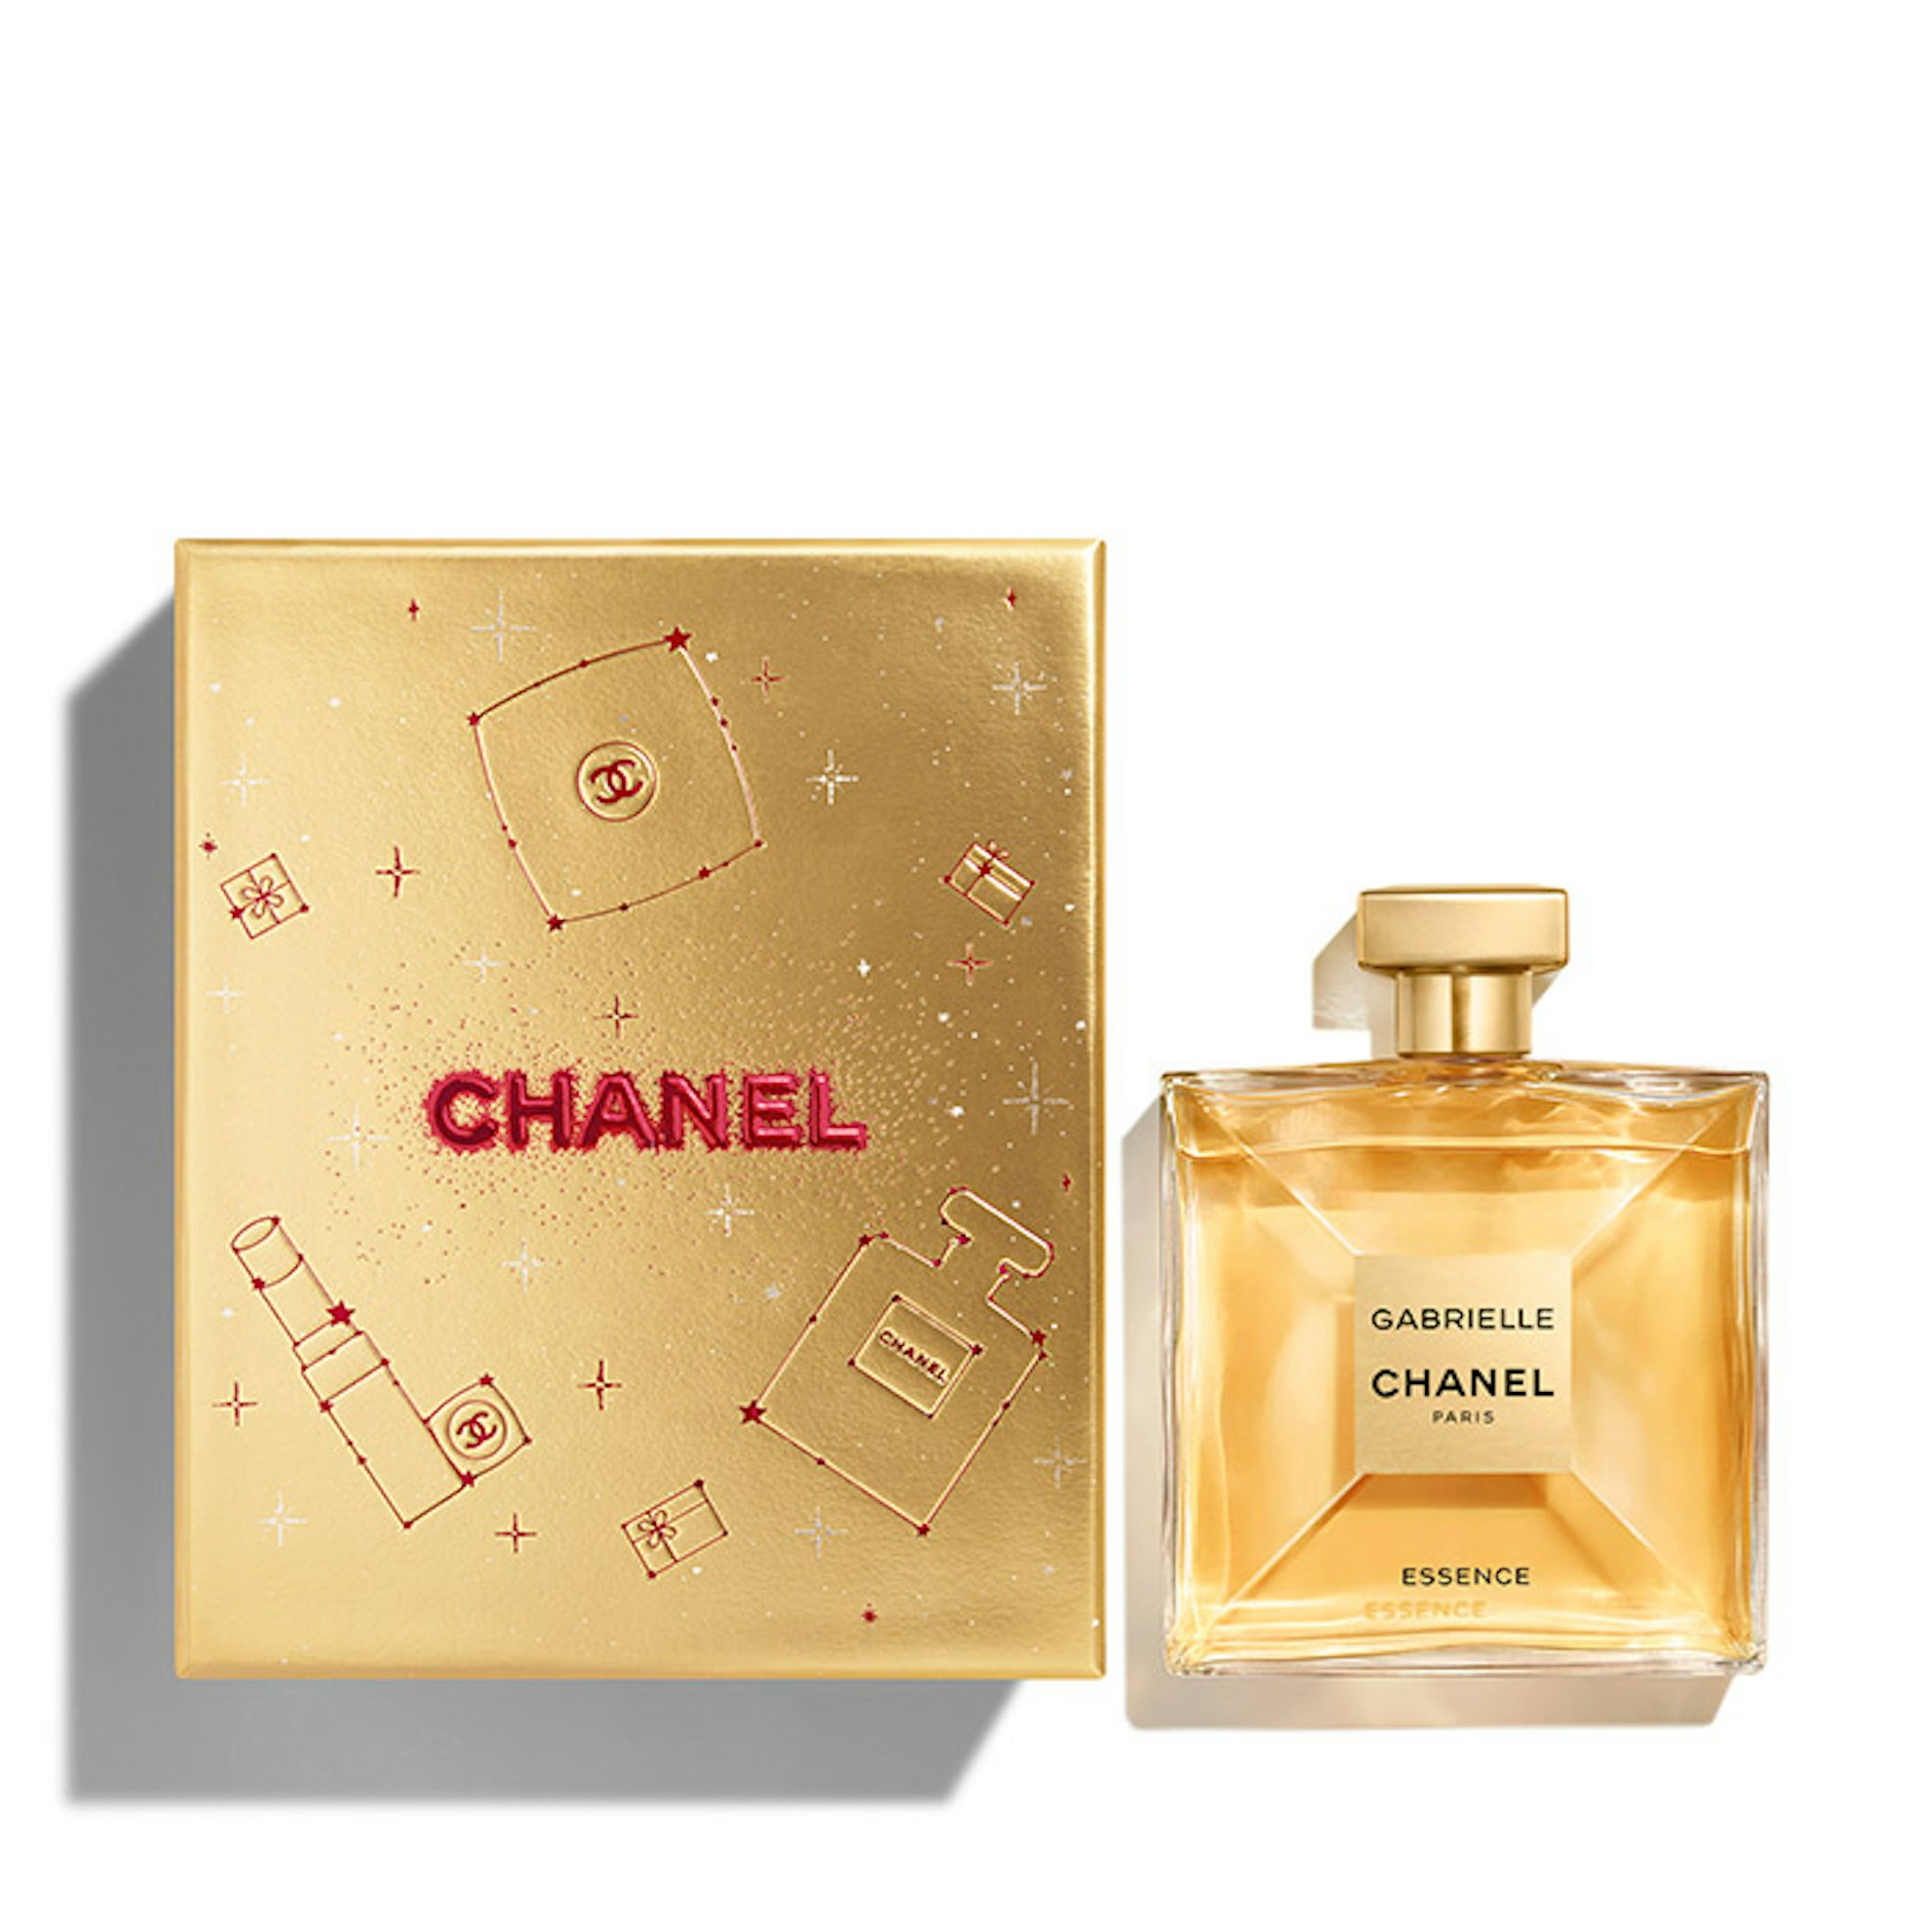 Chanel Gabrielle Essence Eau De Parfum 100ml Spray